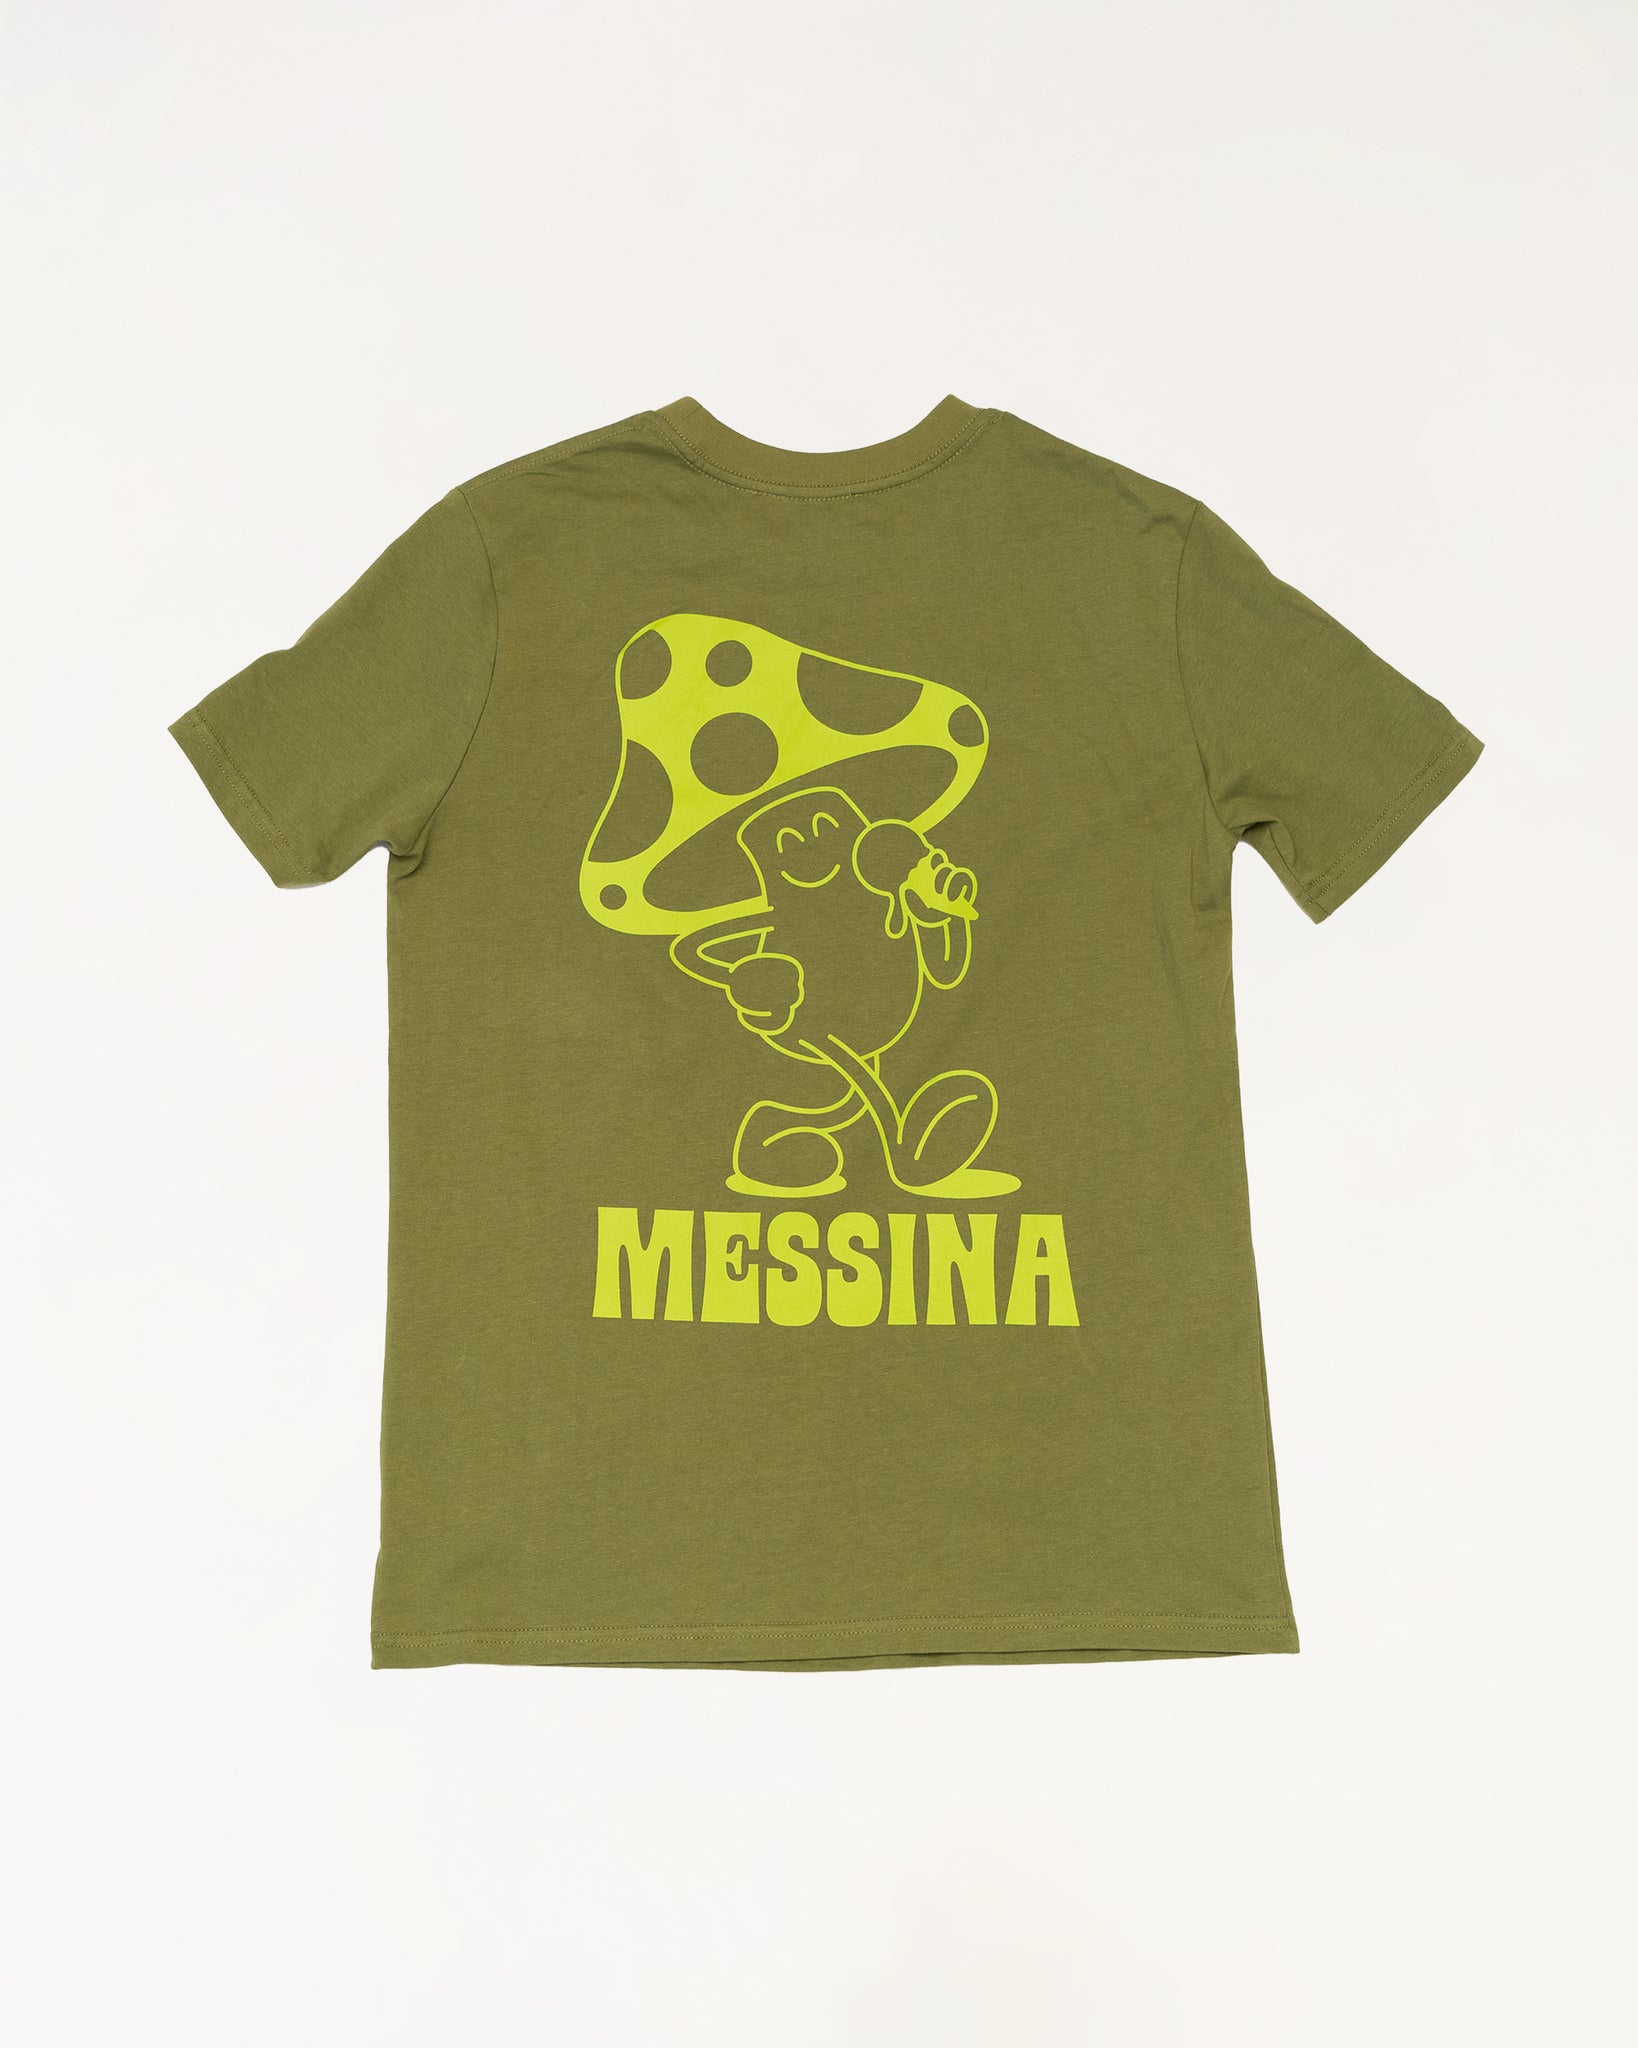 Messina Name T Shirt Messina Things' Unisex Baseball T-Shirt